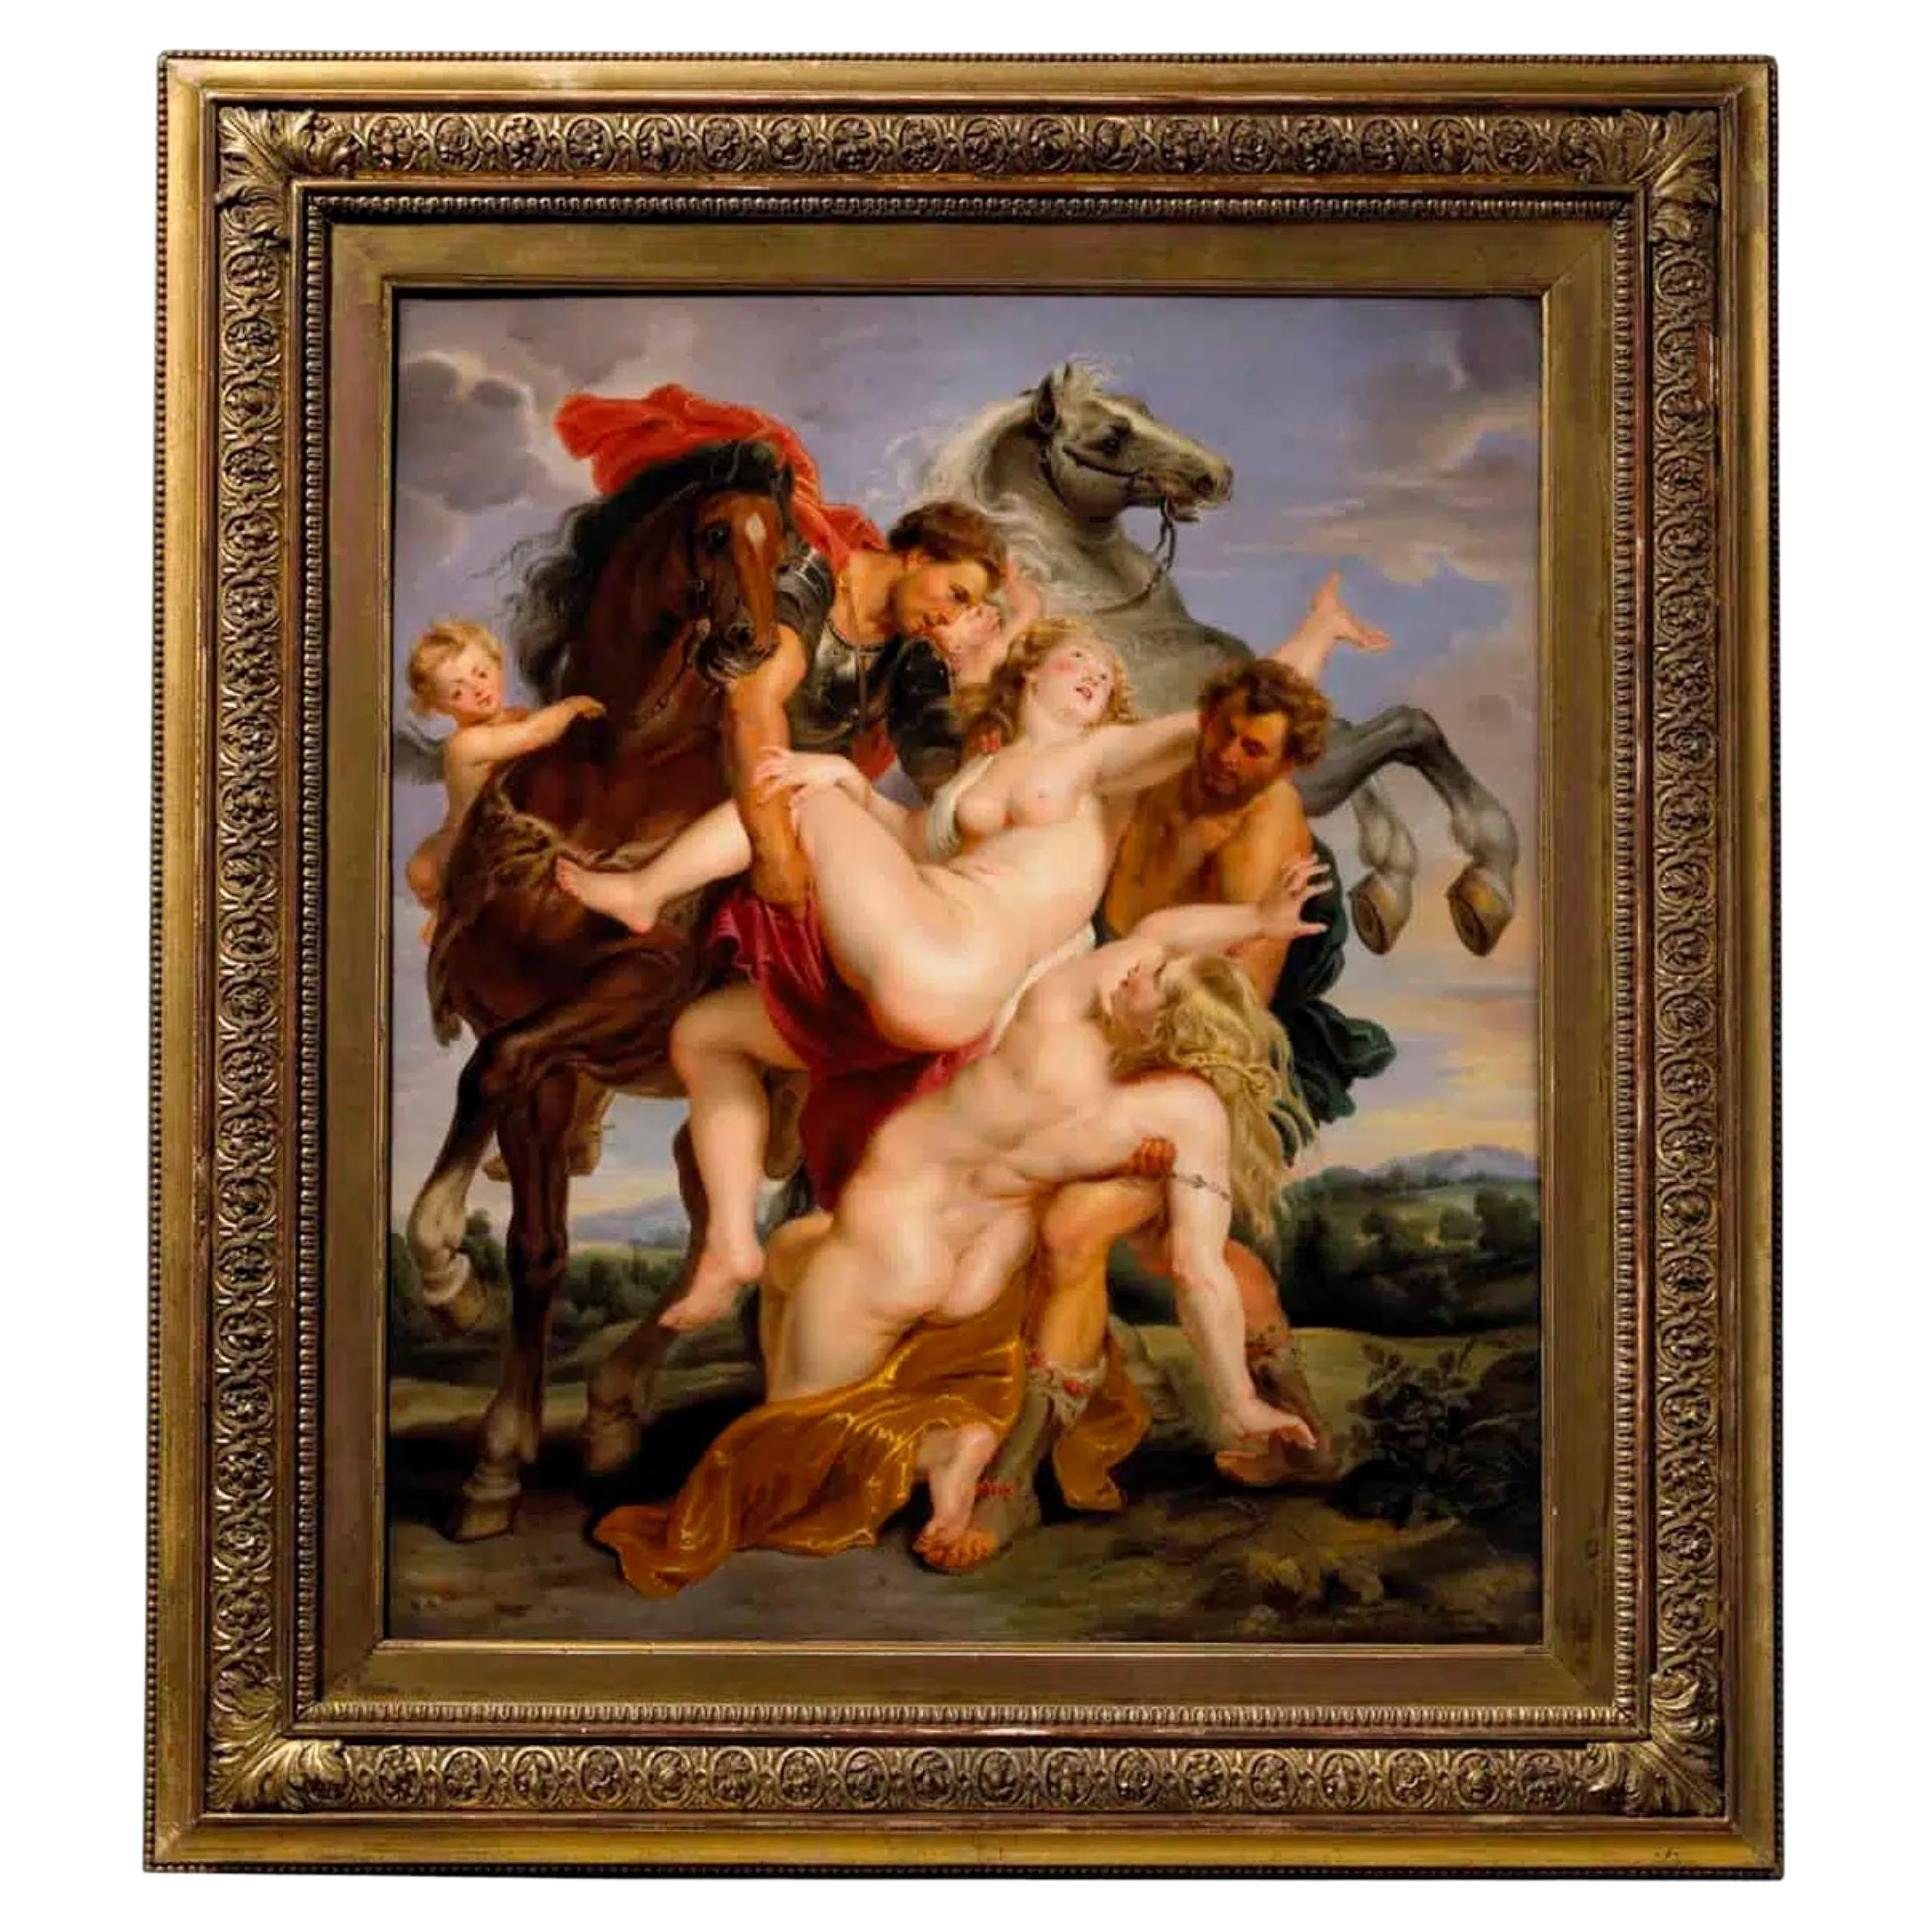 KPM Porcelain Panel: The Rape of the Daughters of Leucippus, Rubens Painting